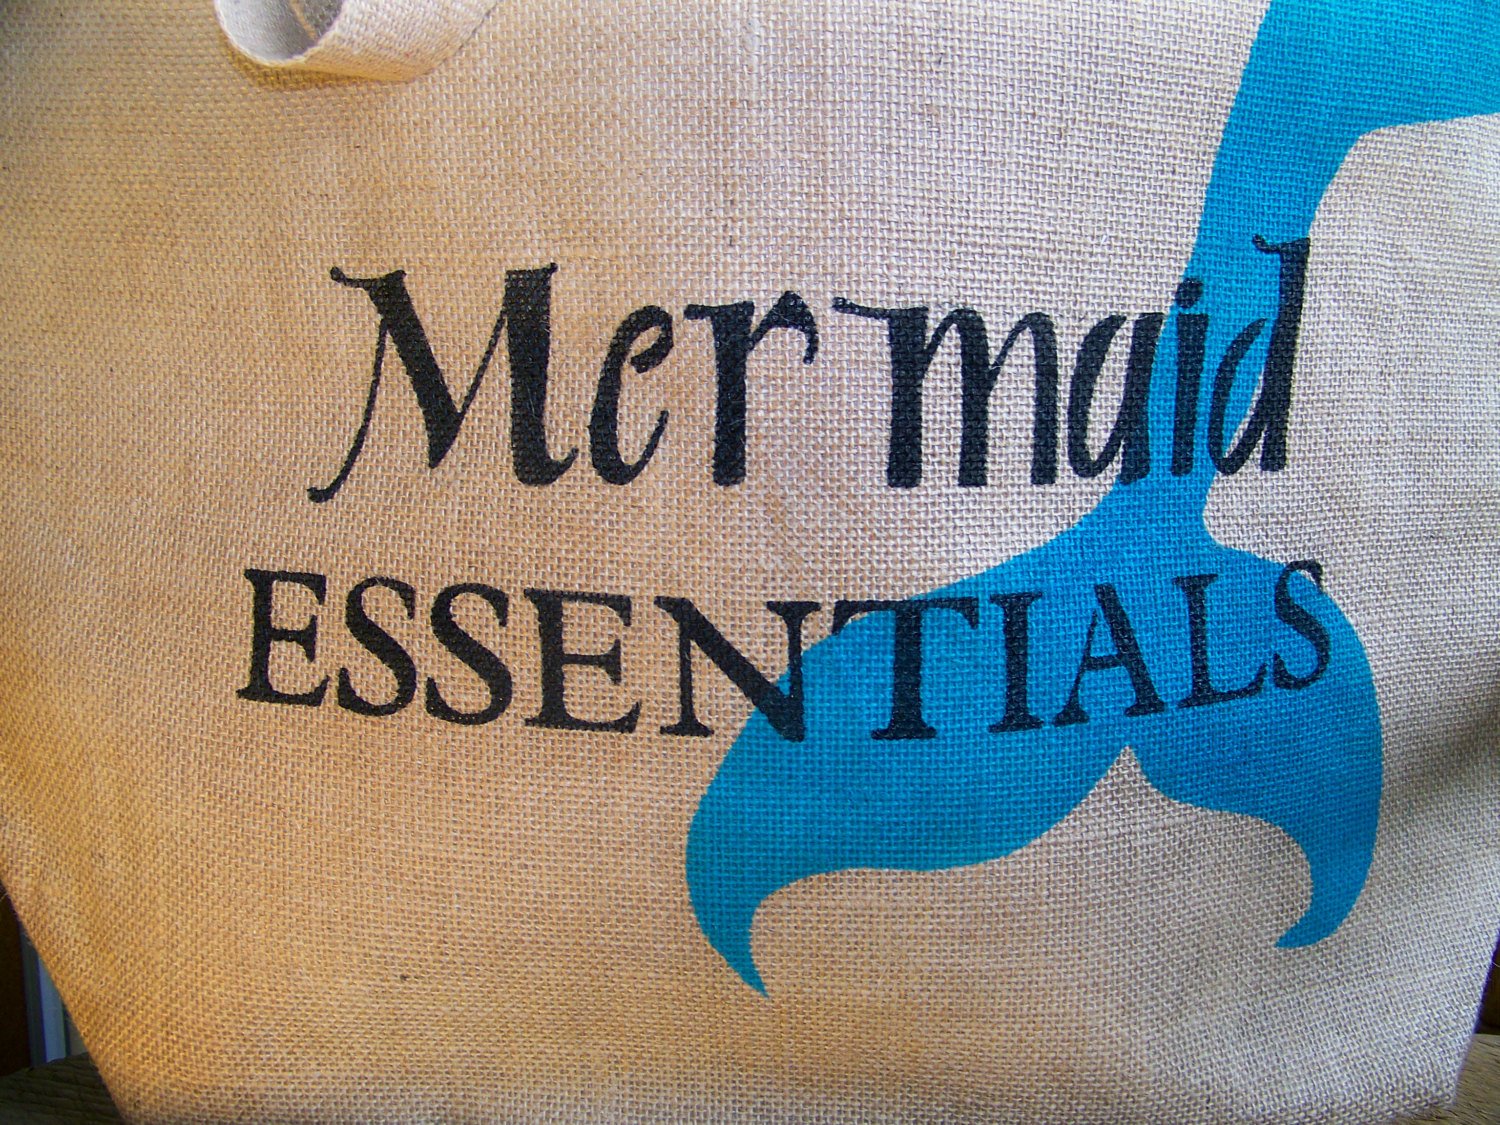 Mermaid Essentials Large Burlap Tote Bag